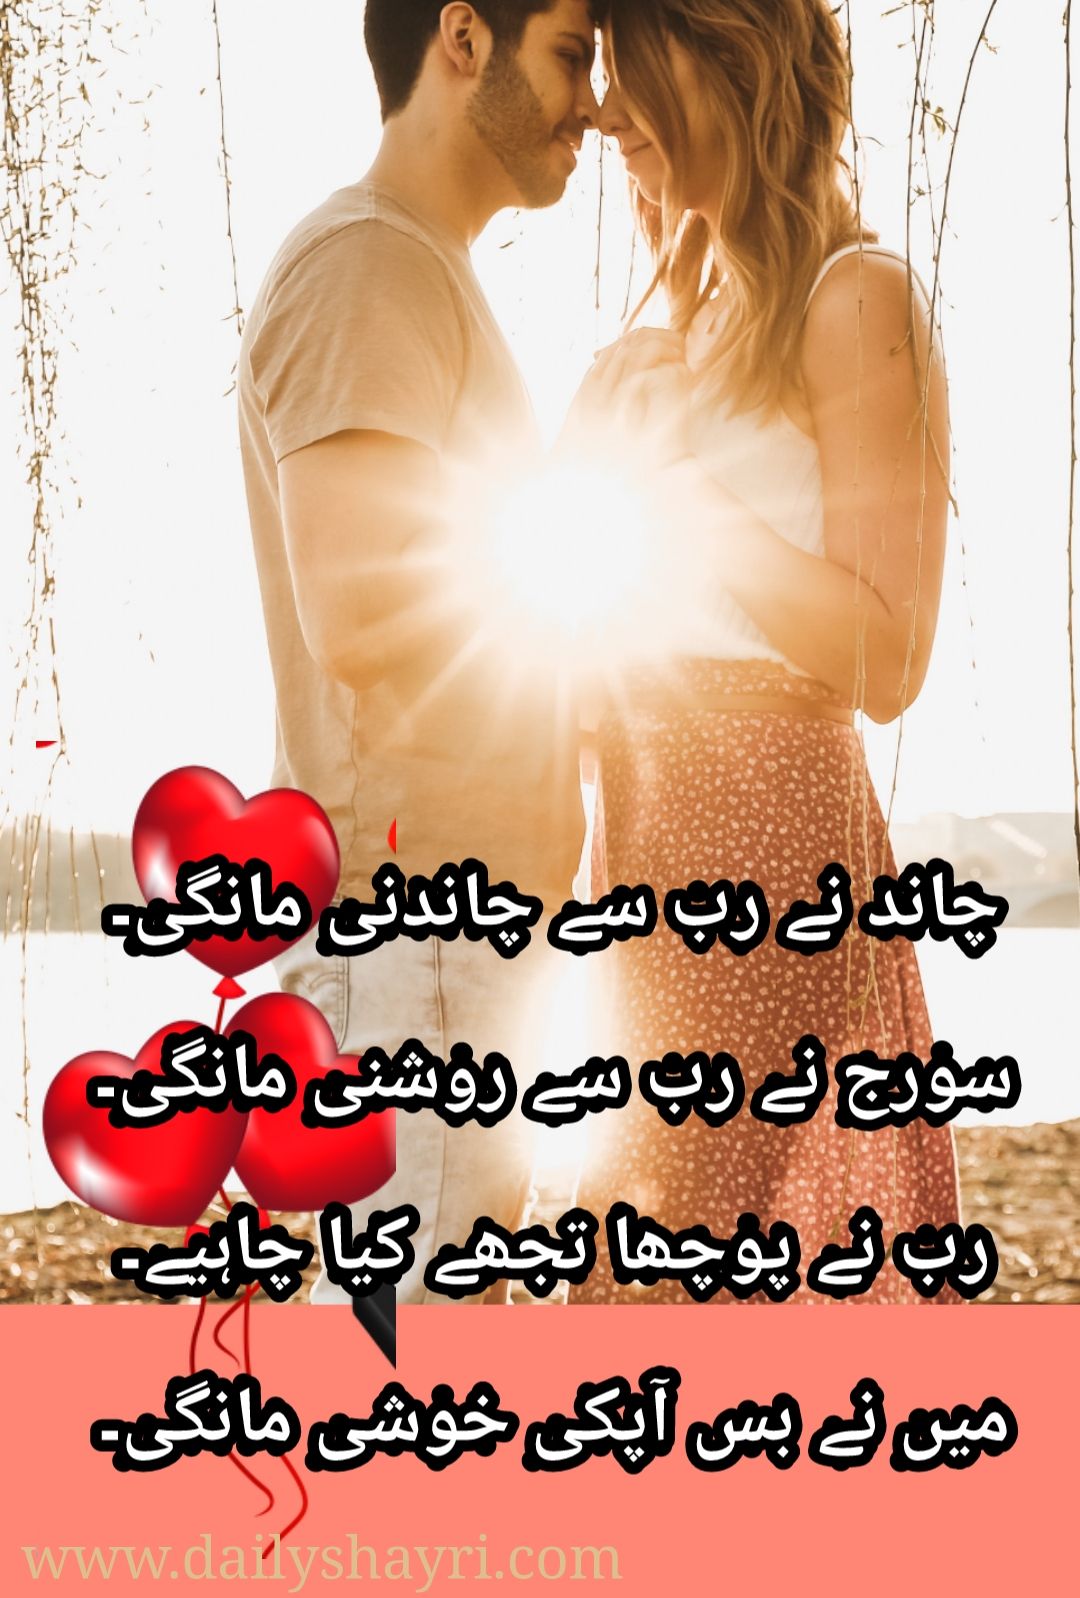 Best dating and love shayari in urdu images 2022